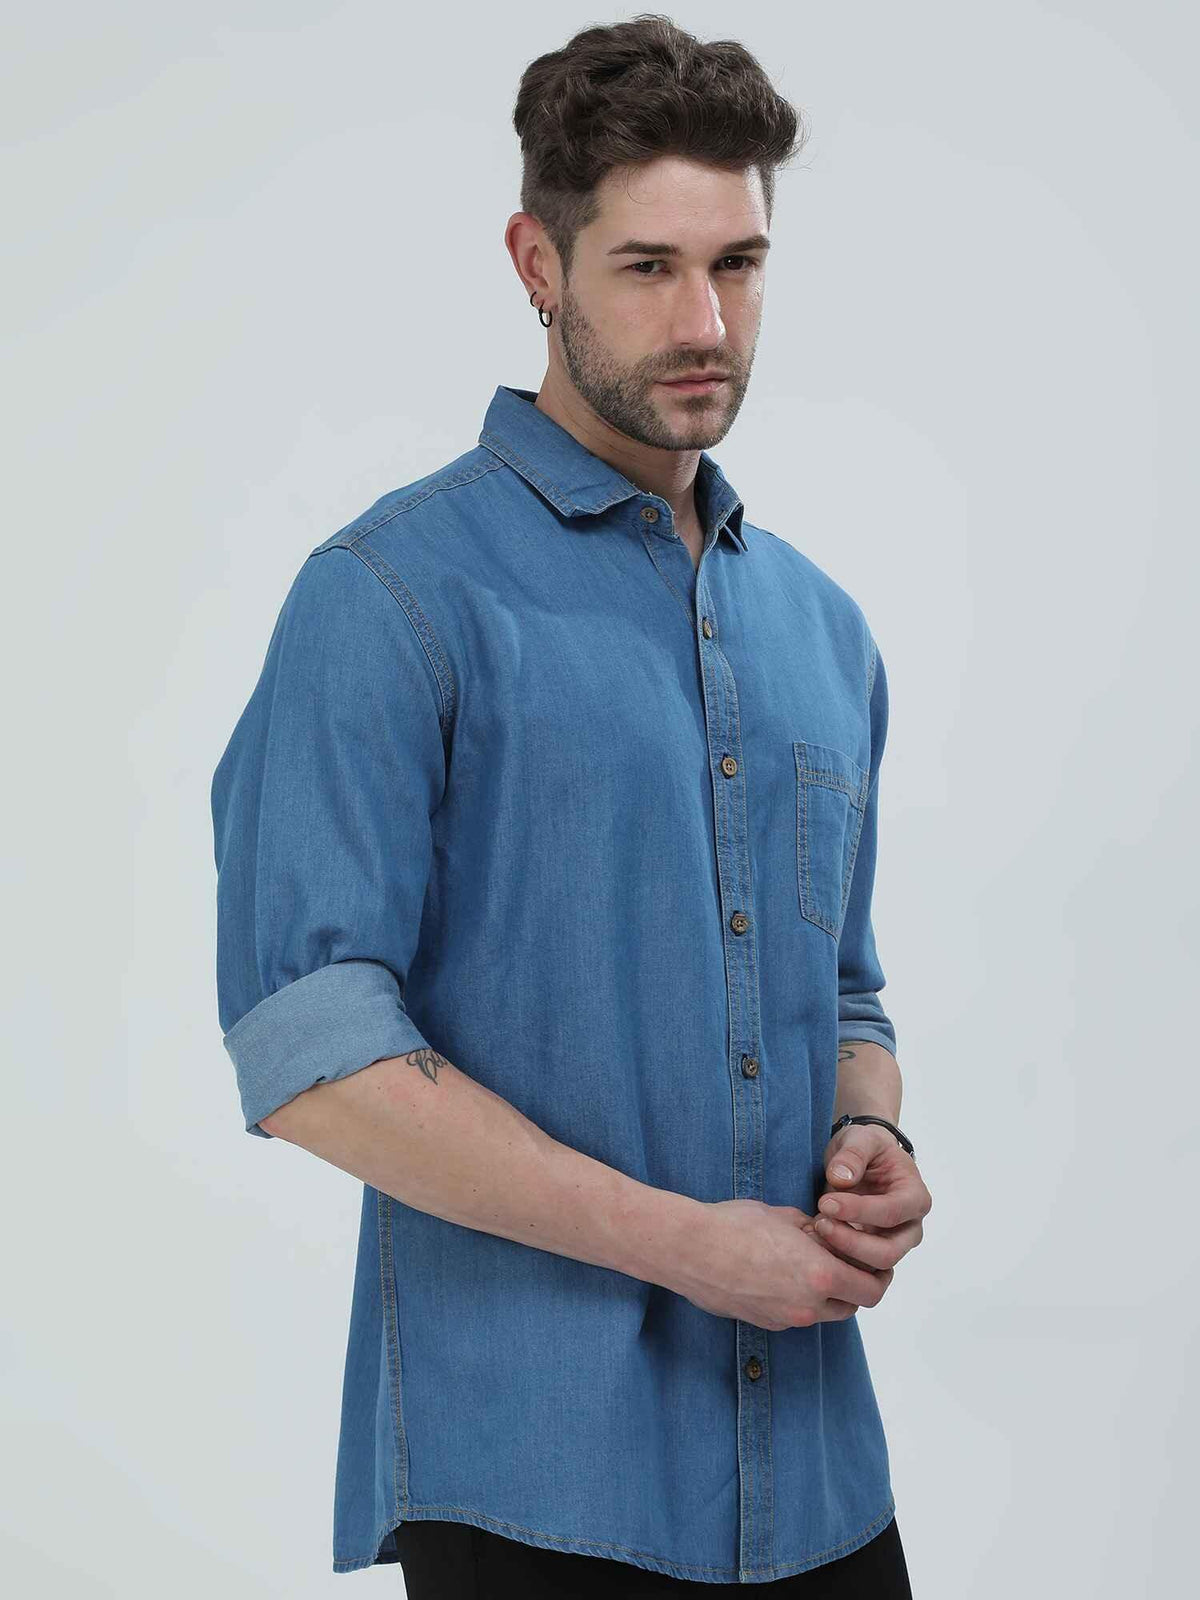 Plus Size Denim Shirts – Best Denim Shirts for Men